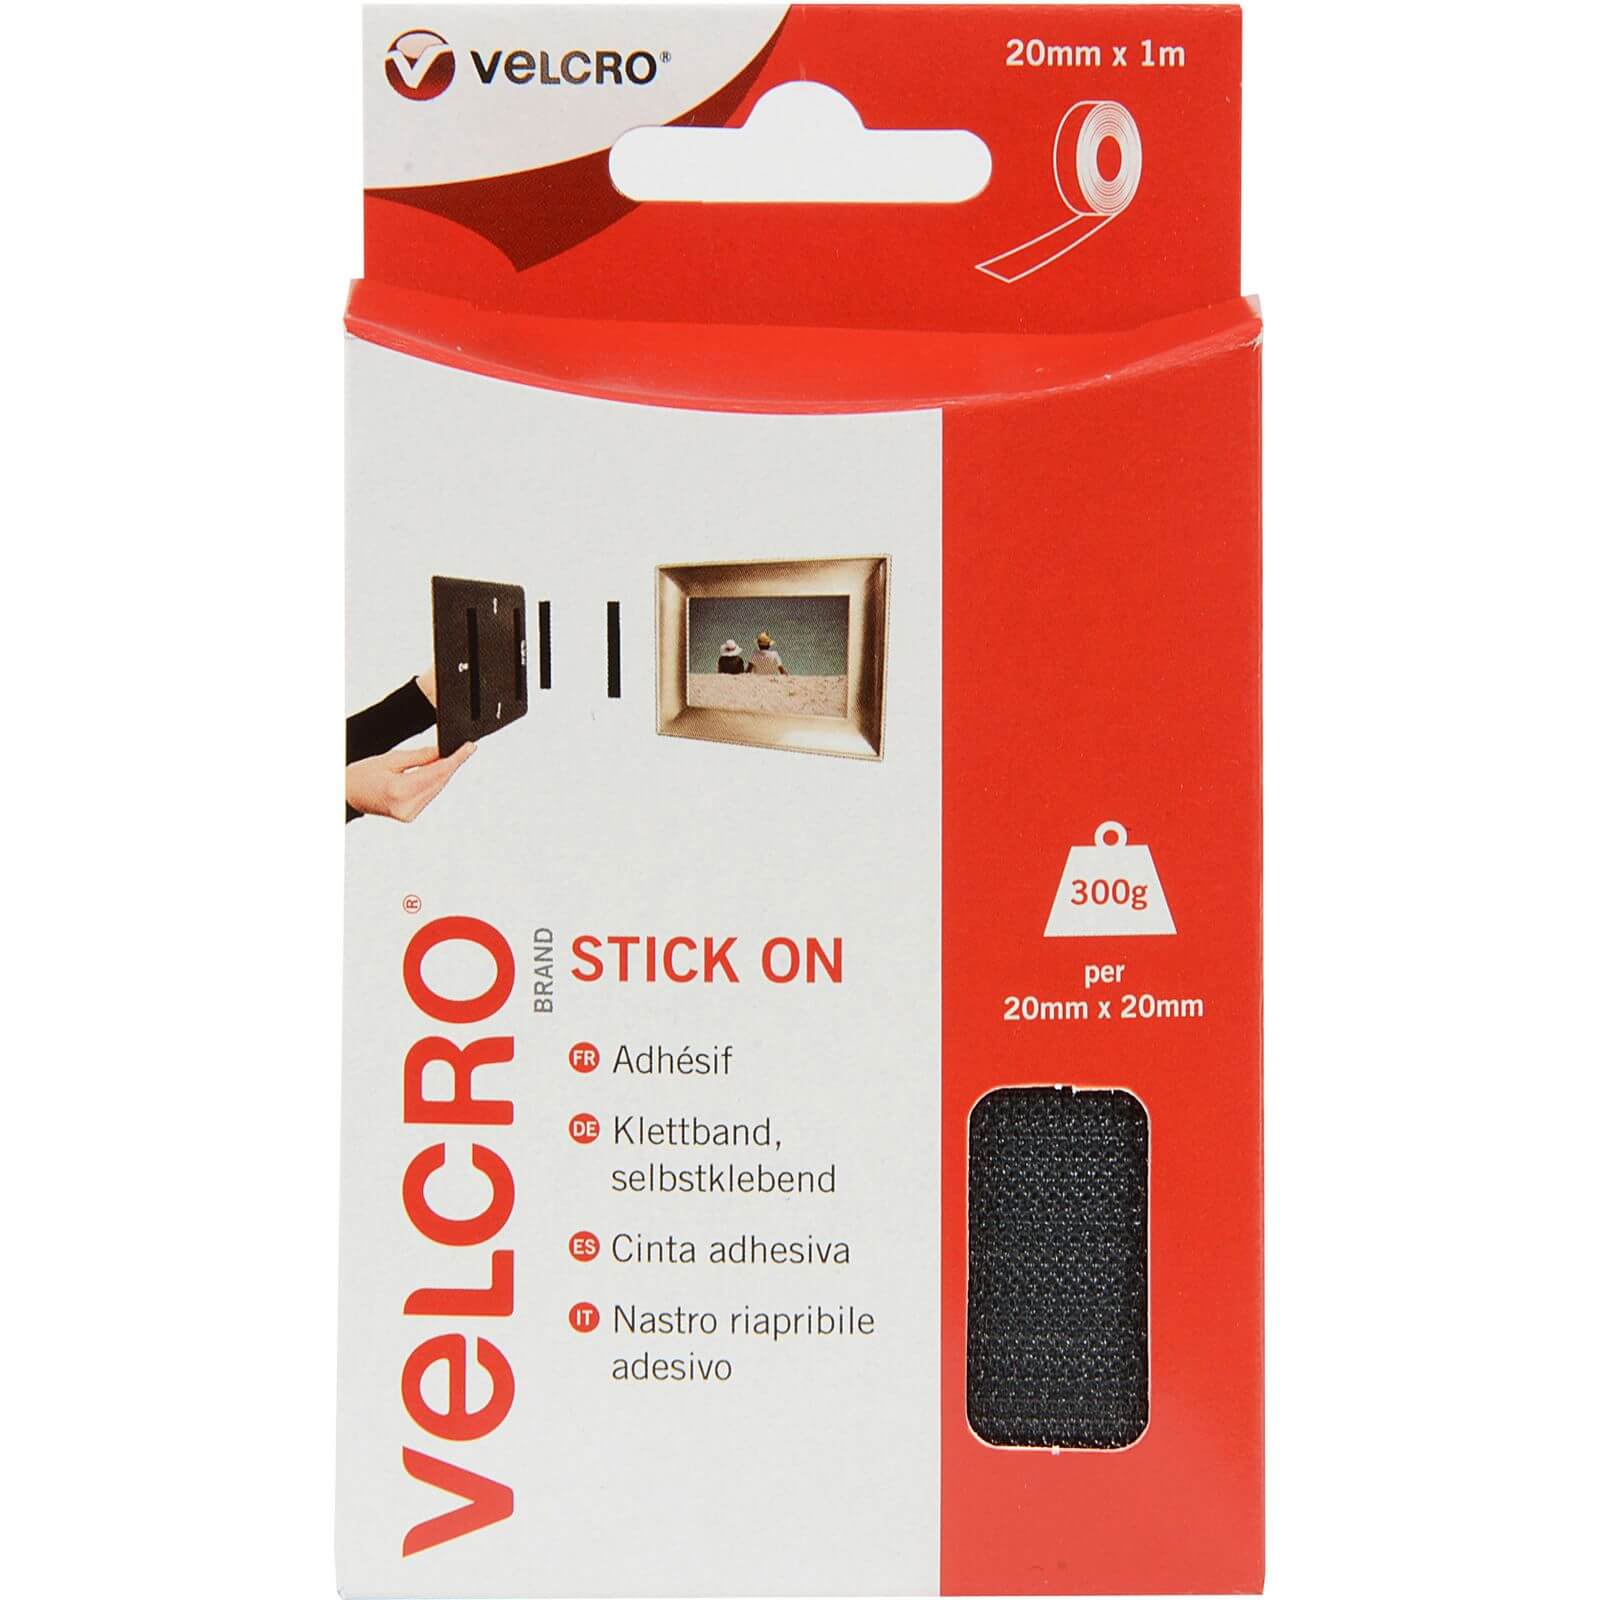 VELCRO? Brand Stick On Tape - Black - 20mm x 1m